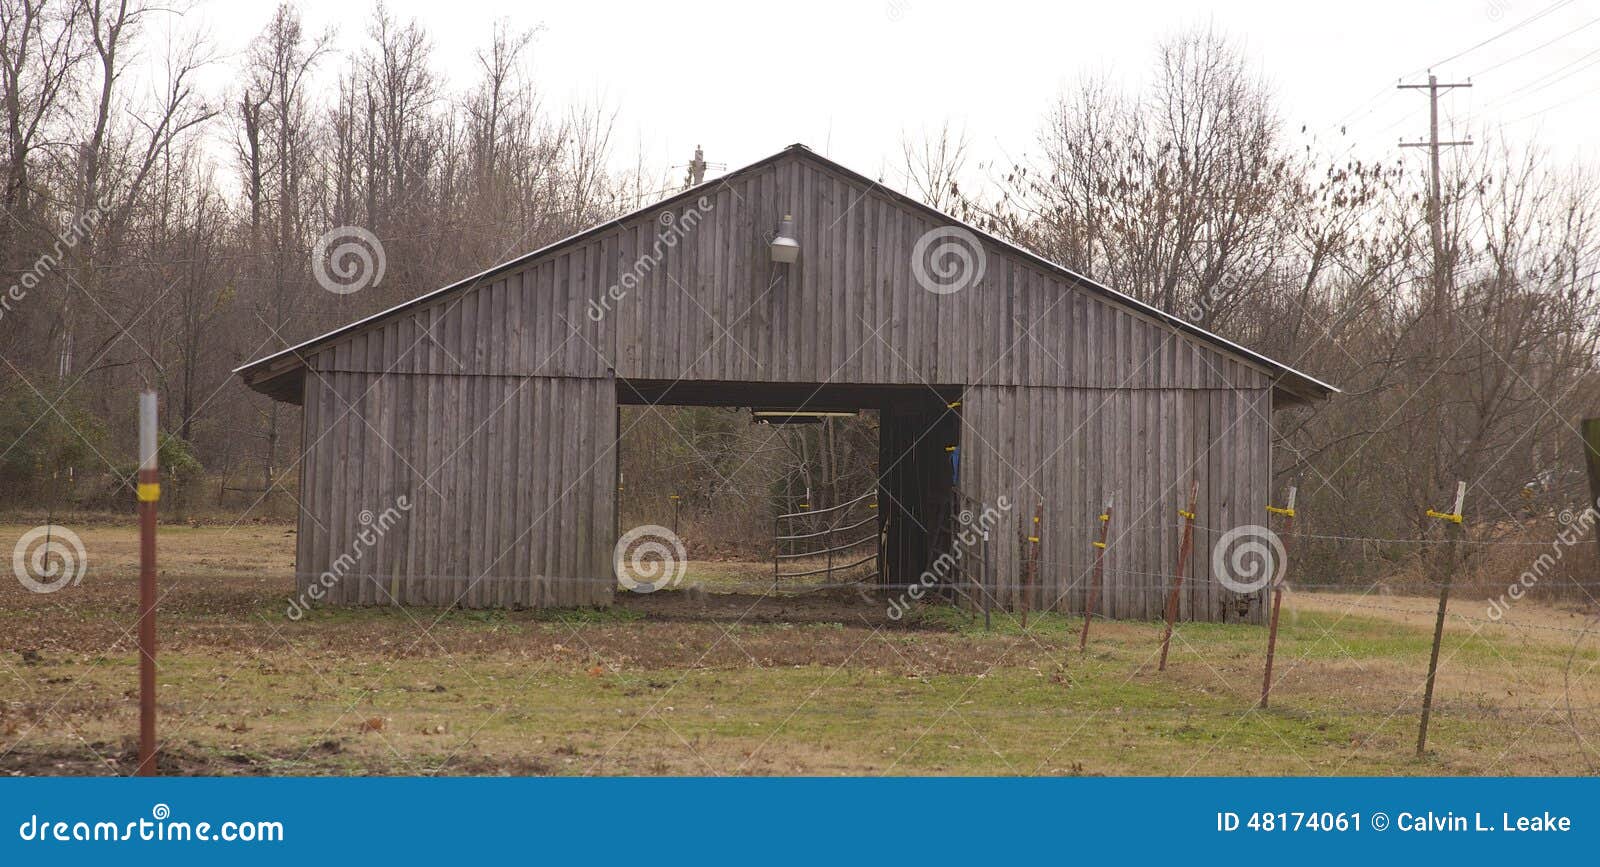 Shed Farm Horse House Stock Photo - Image: 48174061